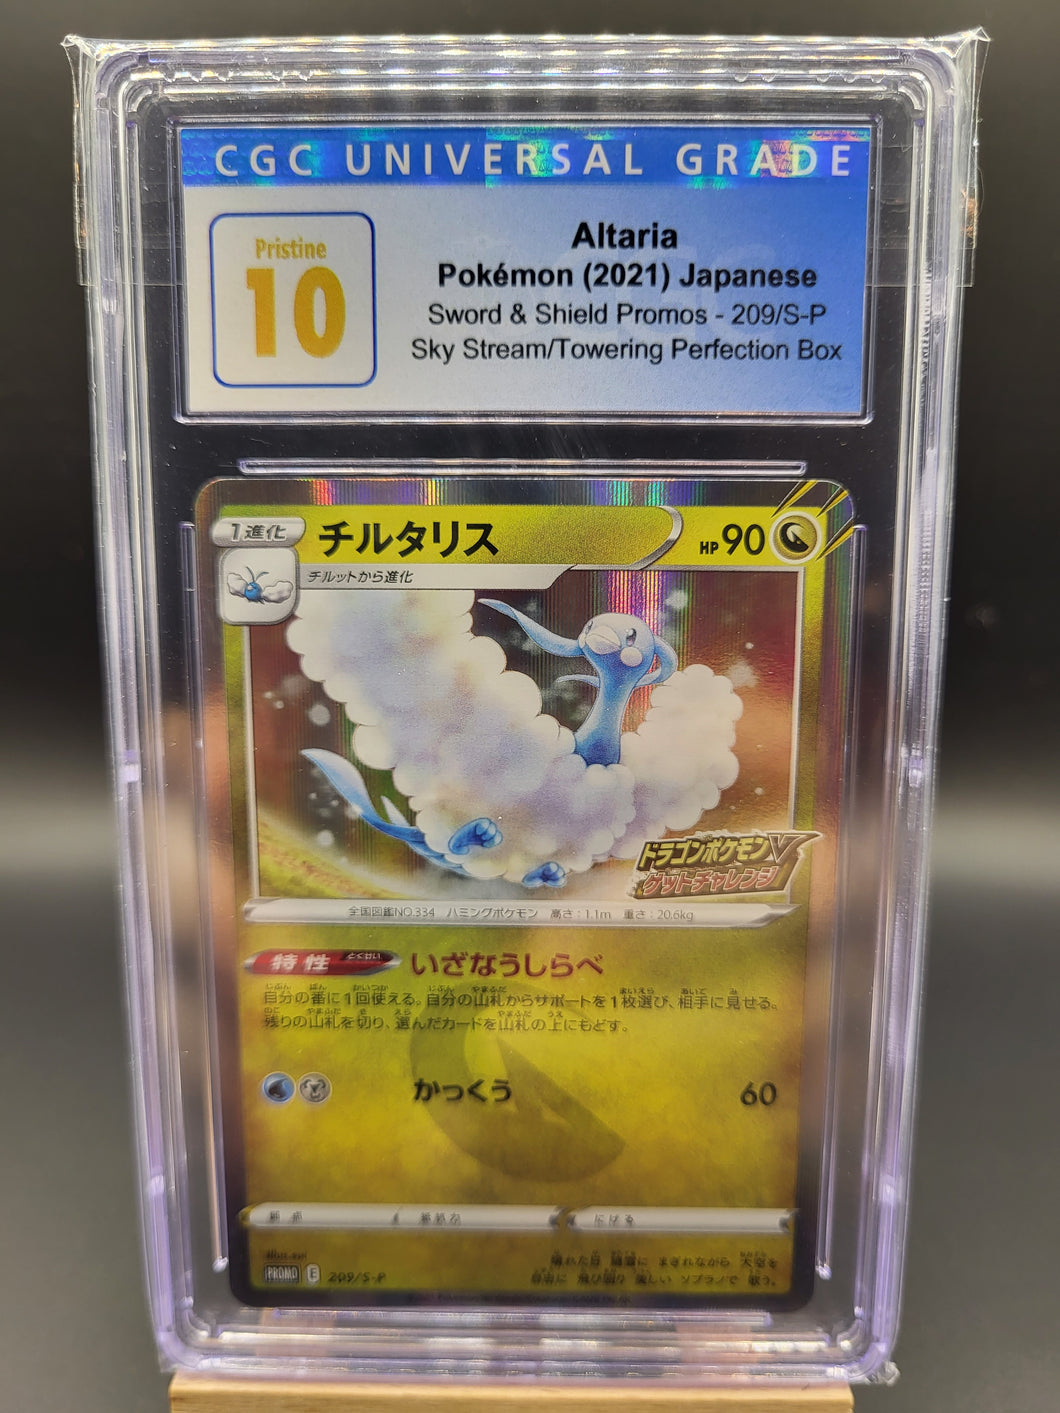 CGC PRISTINE 10 Altaria - Promo Sky Stream/Towering Perfection  209/S-P Japanese